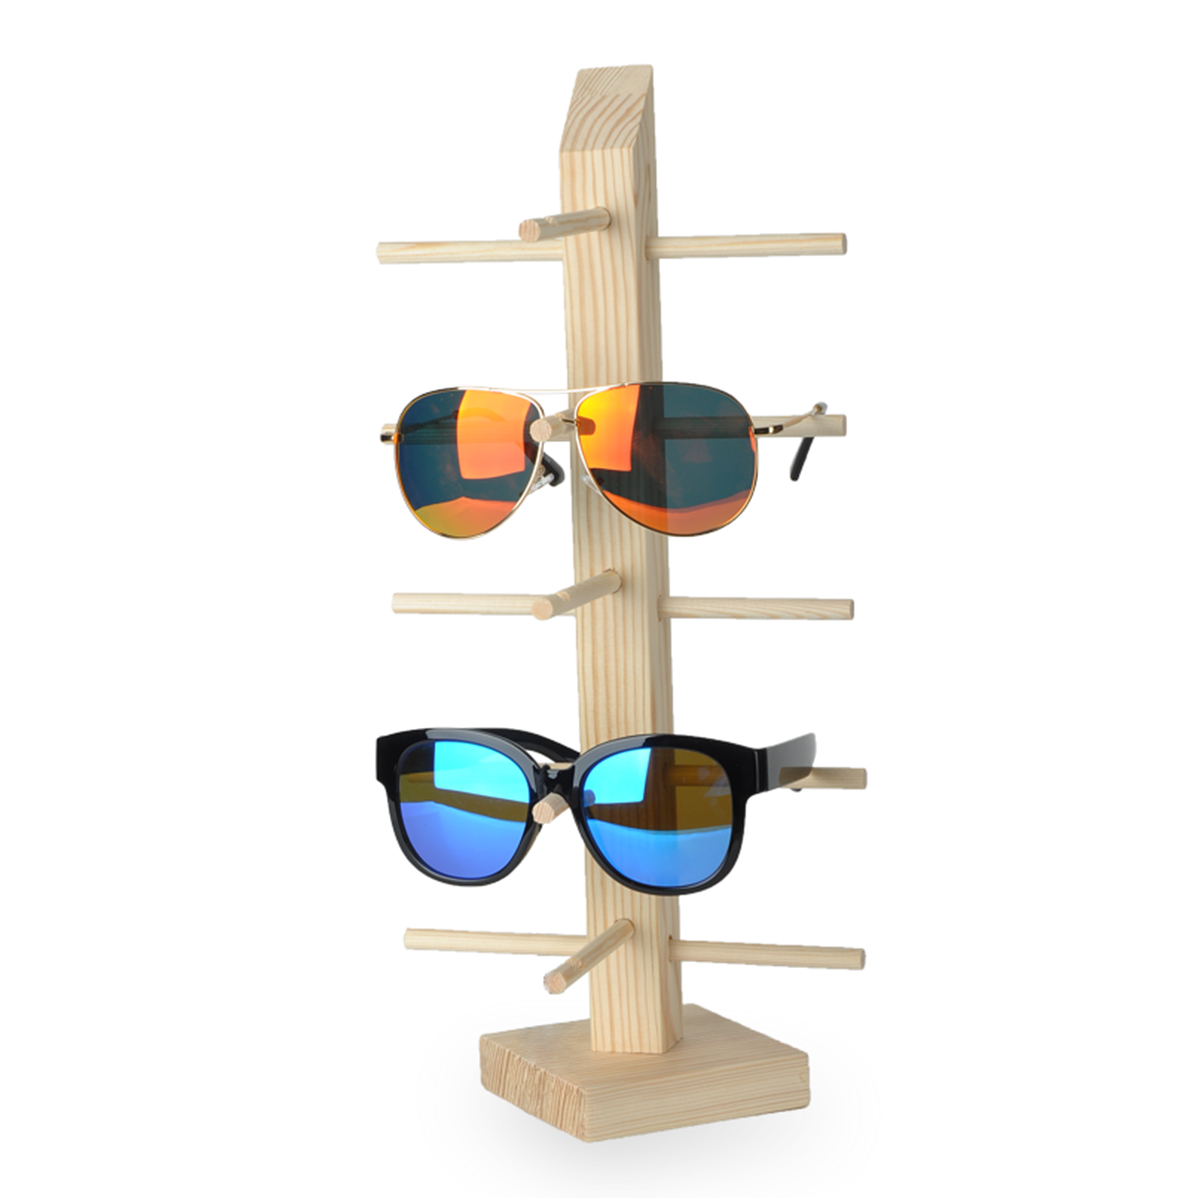 Natural-Wood-Wooden-Sunglasses-Eyeglasseses-Display-Rack-Stand-Holder-Organizer-3456-Layers-1478396-2